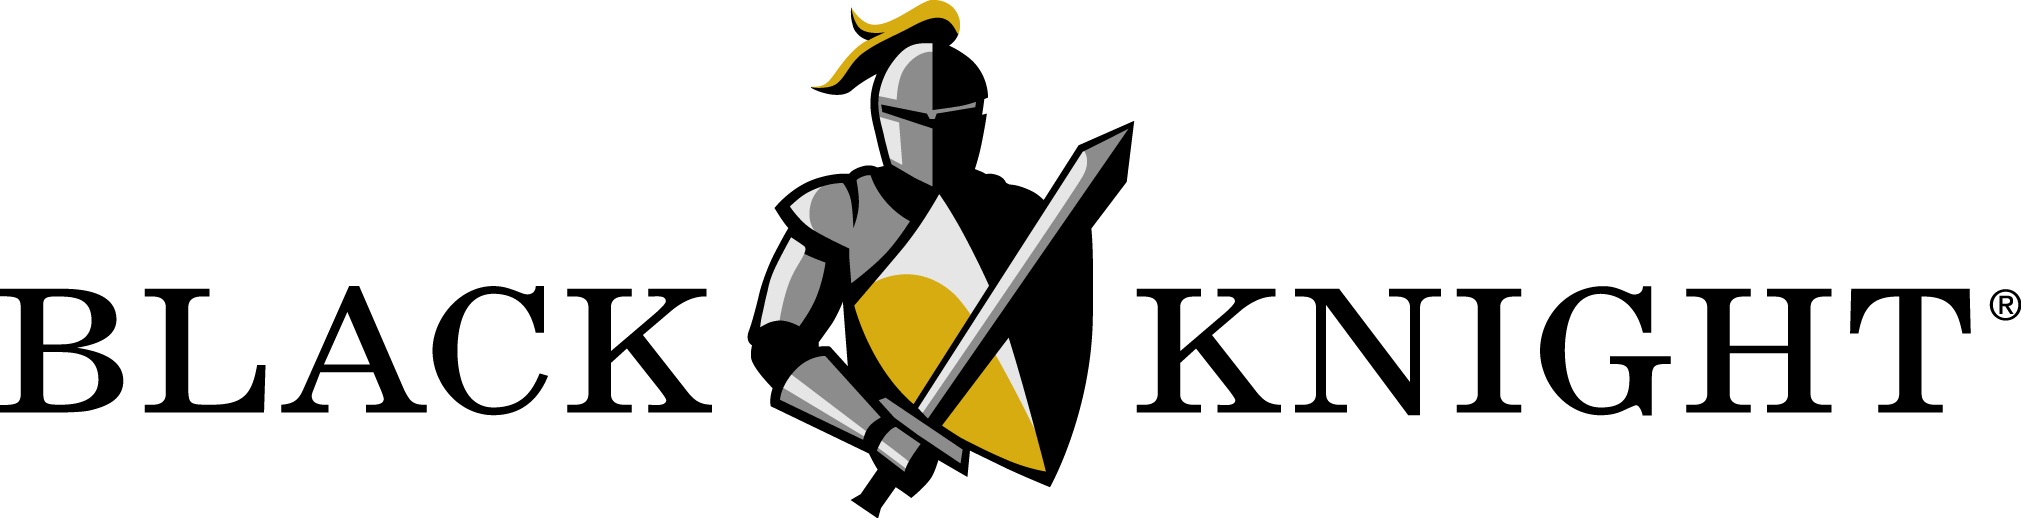 Black Knight Logo - Operation New Uniform. black knight logo